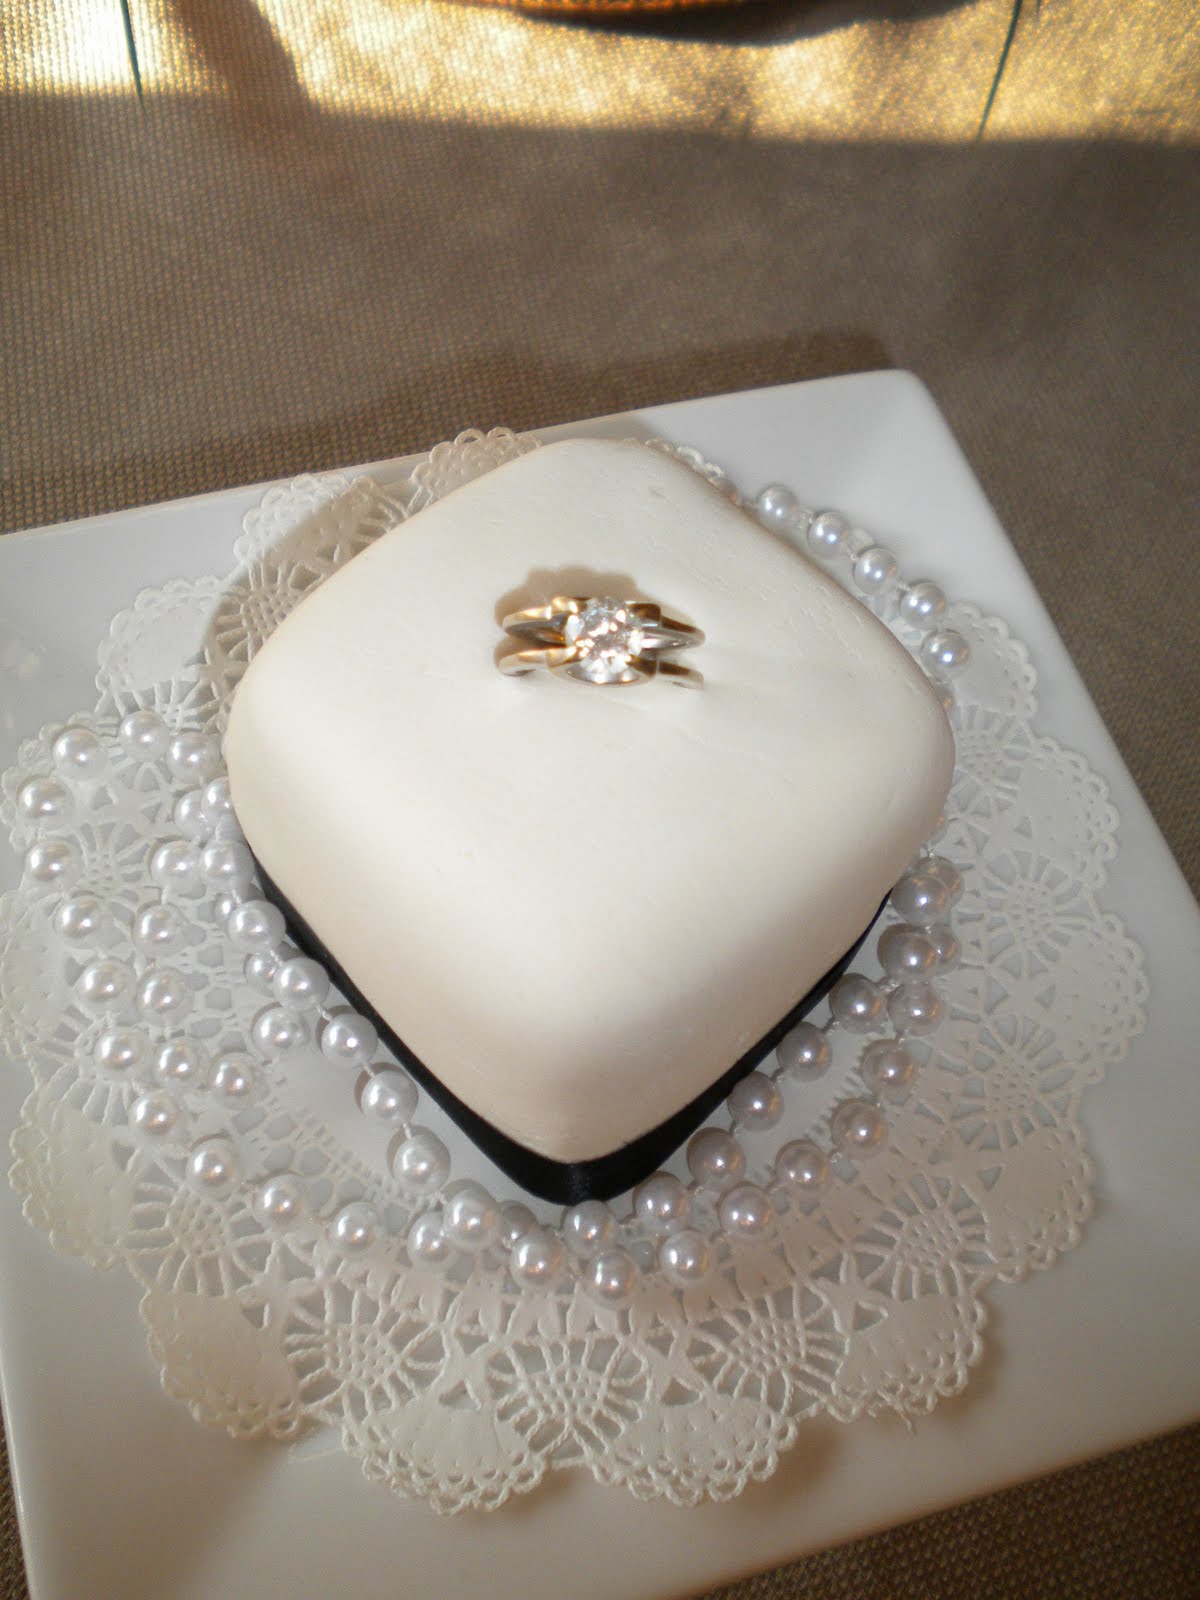 Individual Mini Wedding Cakes!